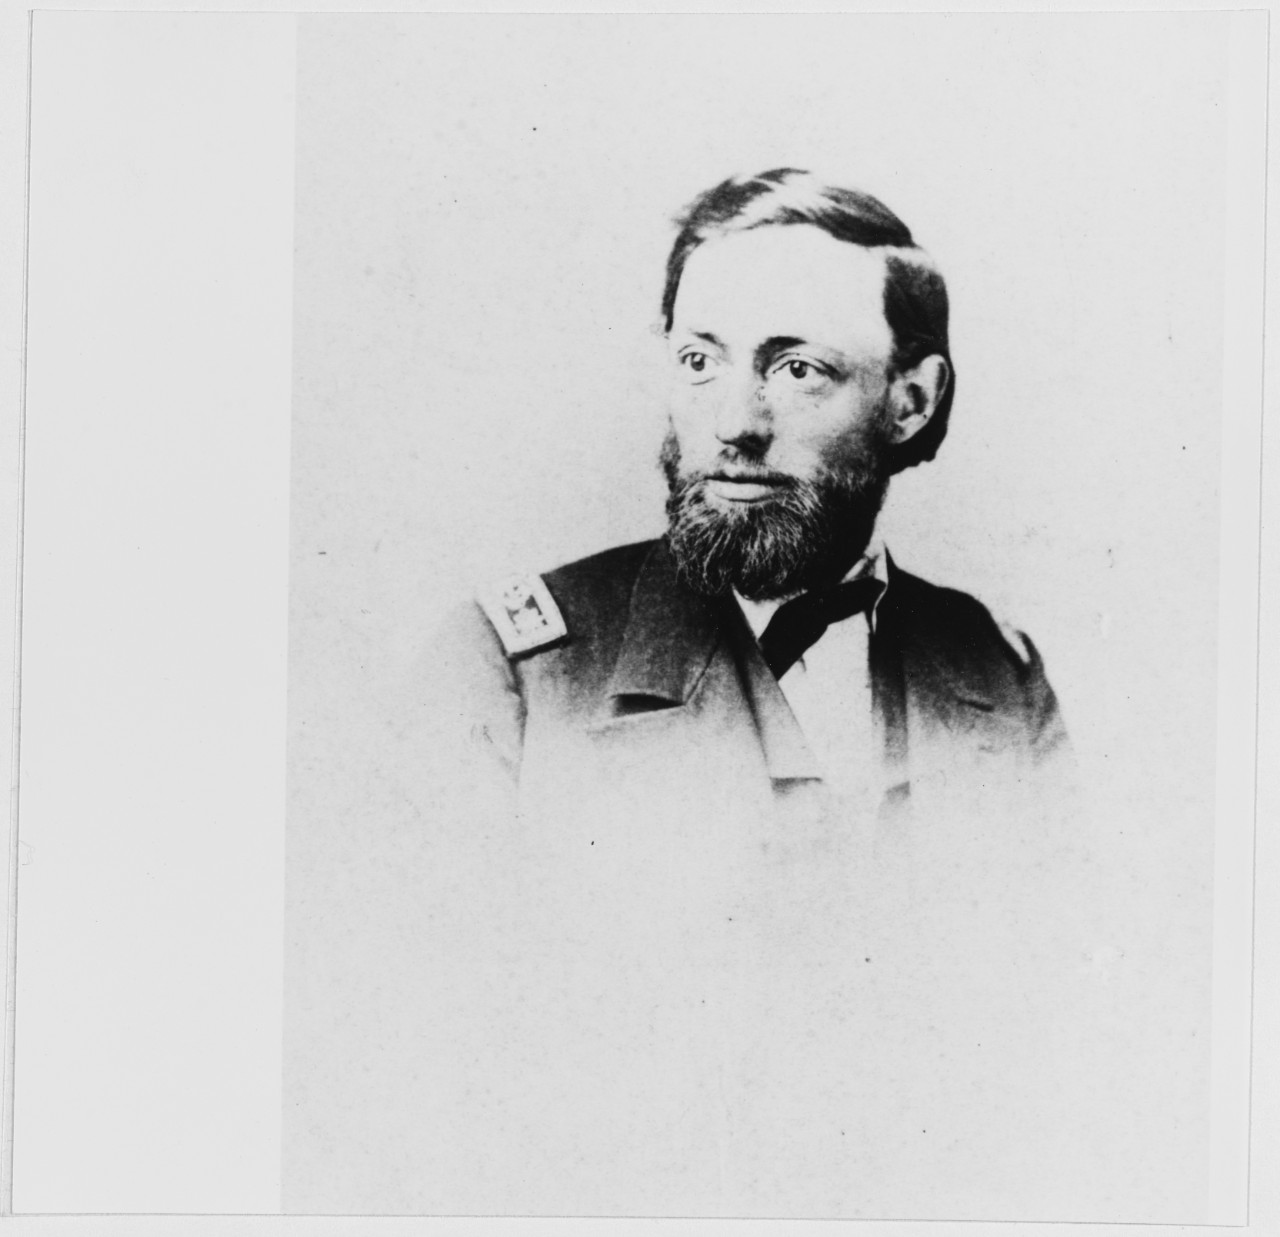 Commander LeRoy Fitch, USN